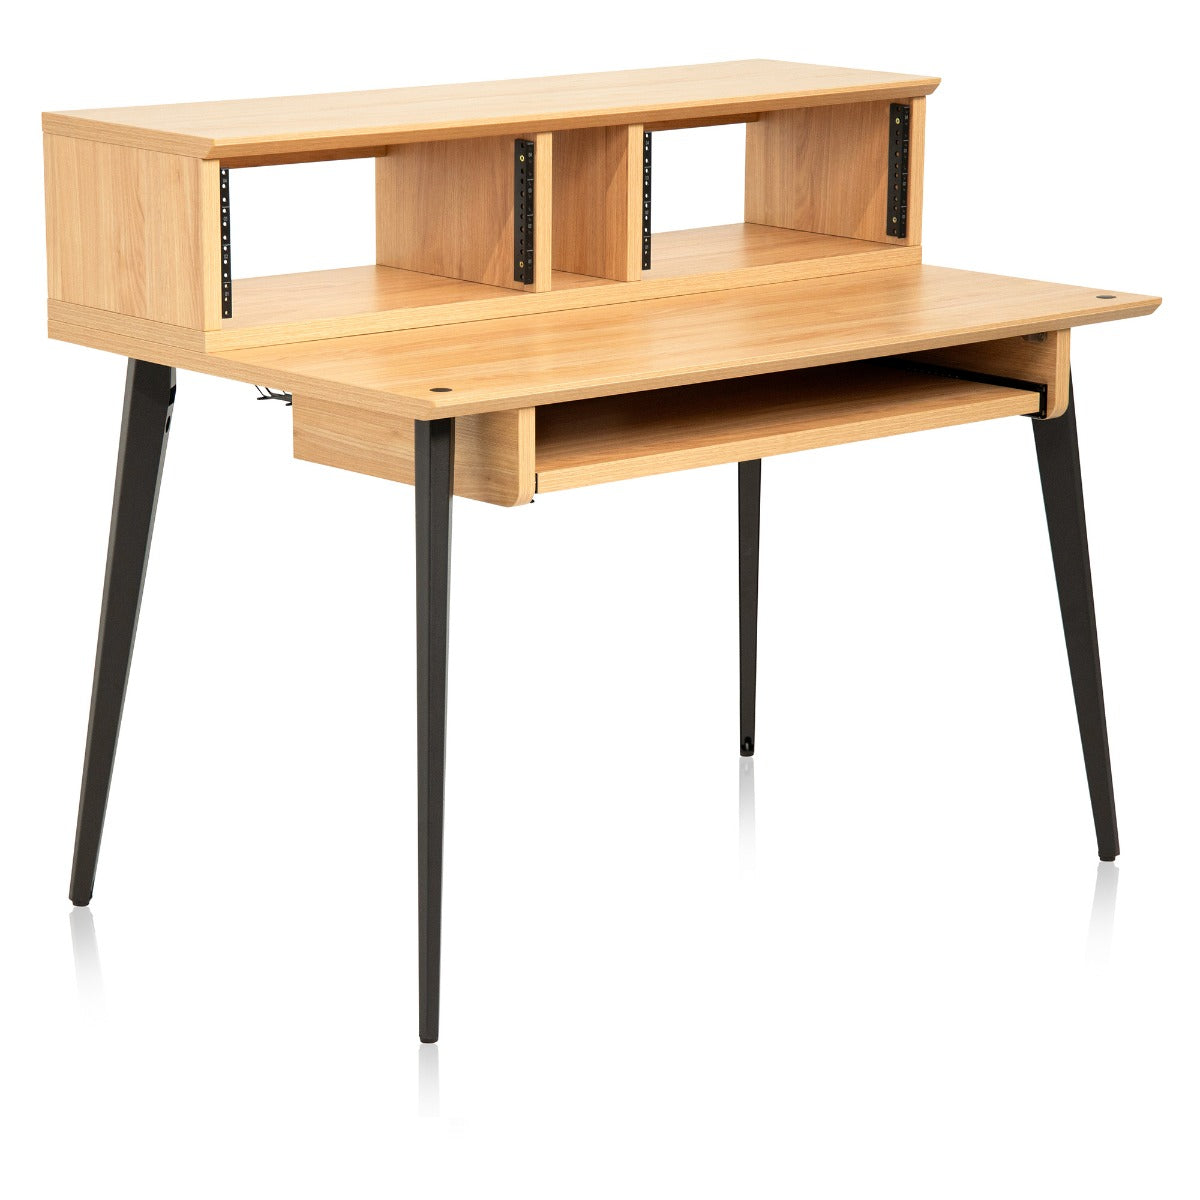 Right angled image of the Gator Frameworks Elite Series Furniture Desk - Maple